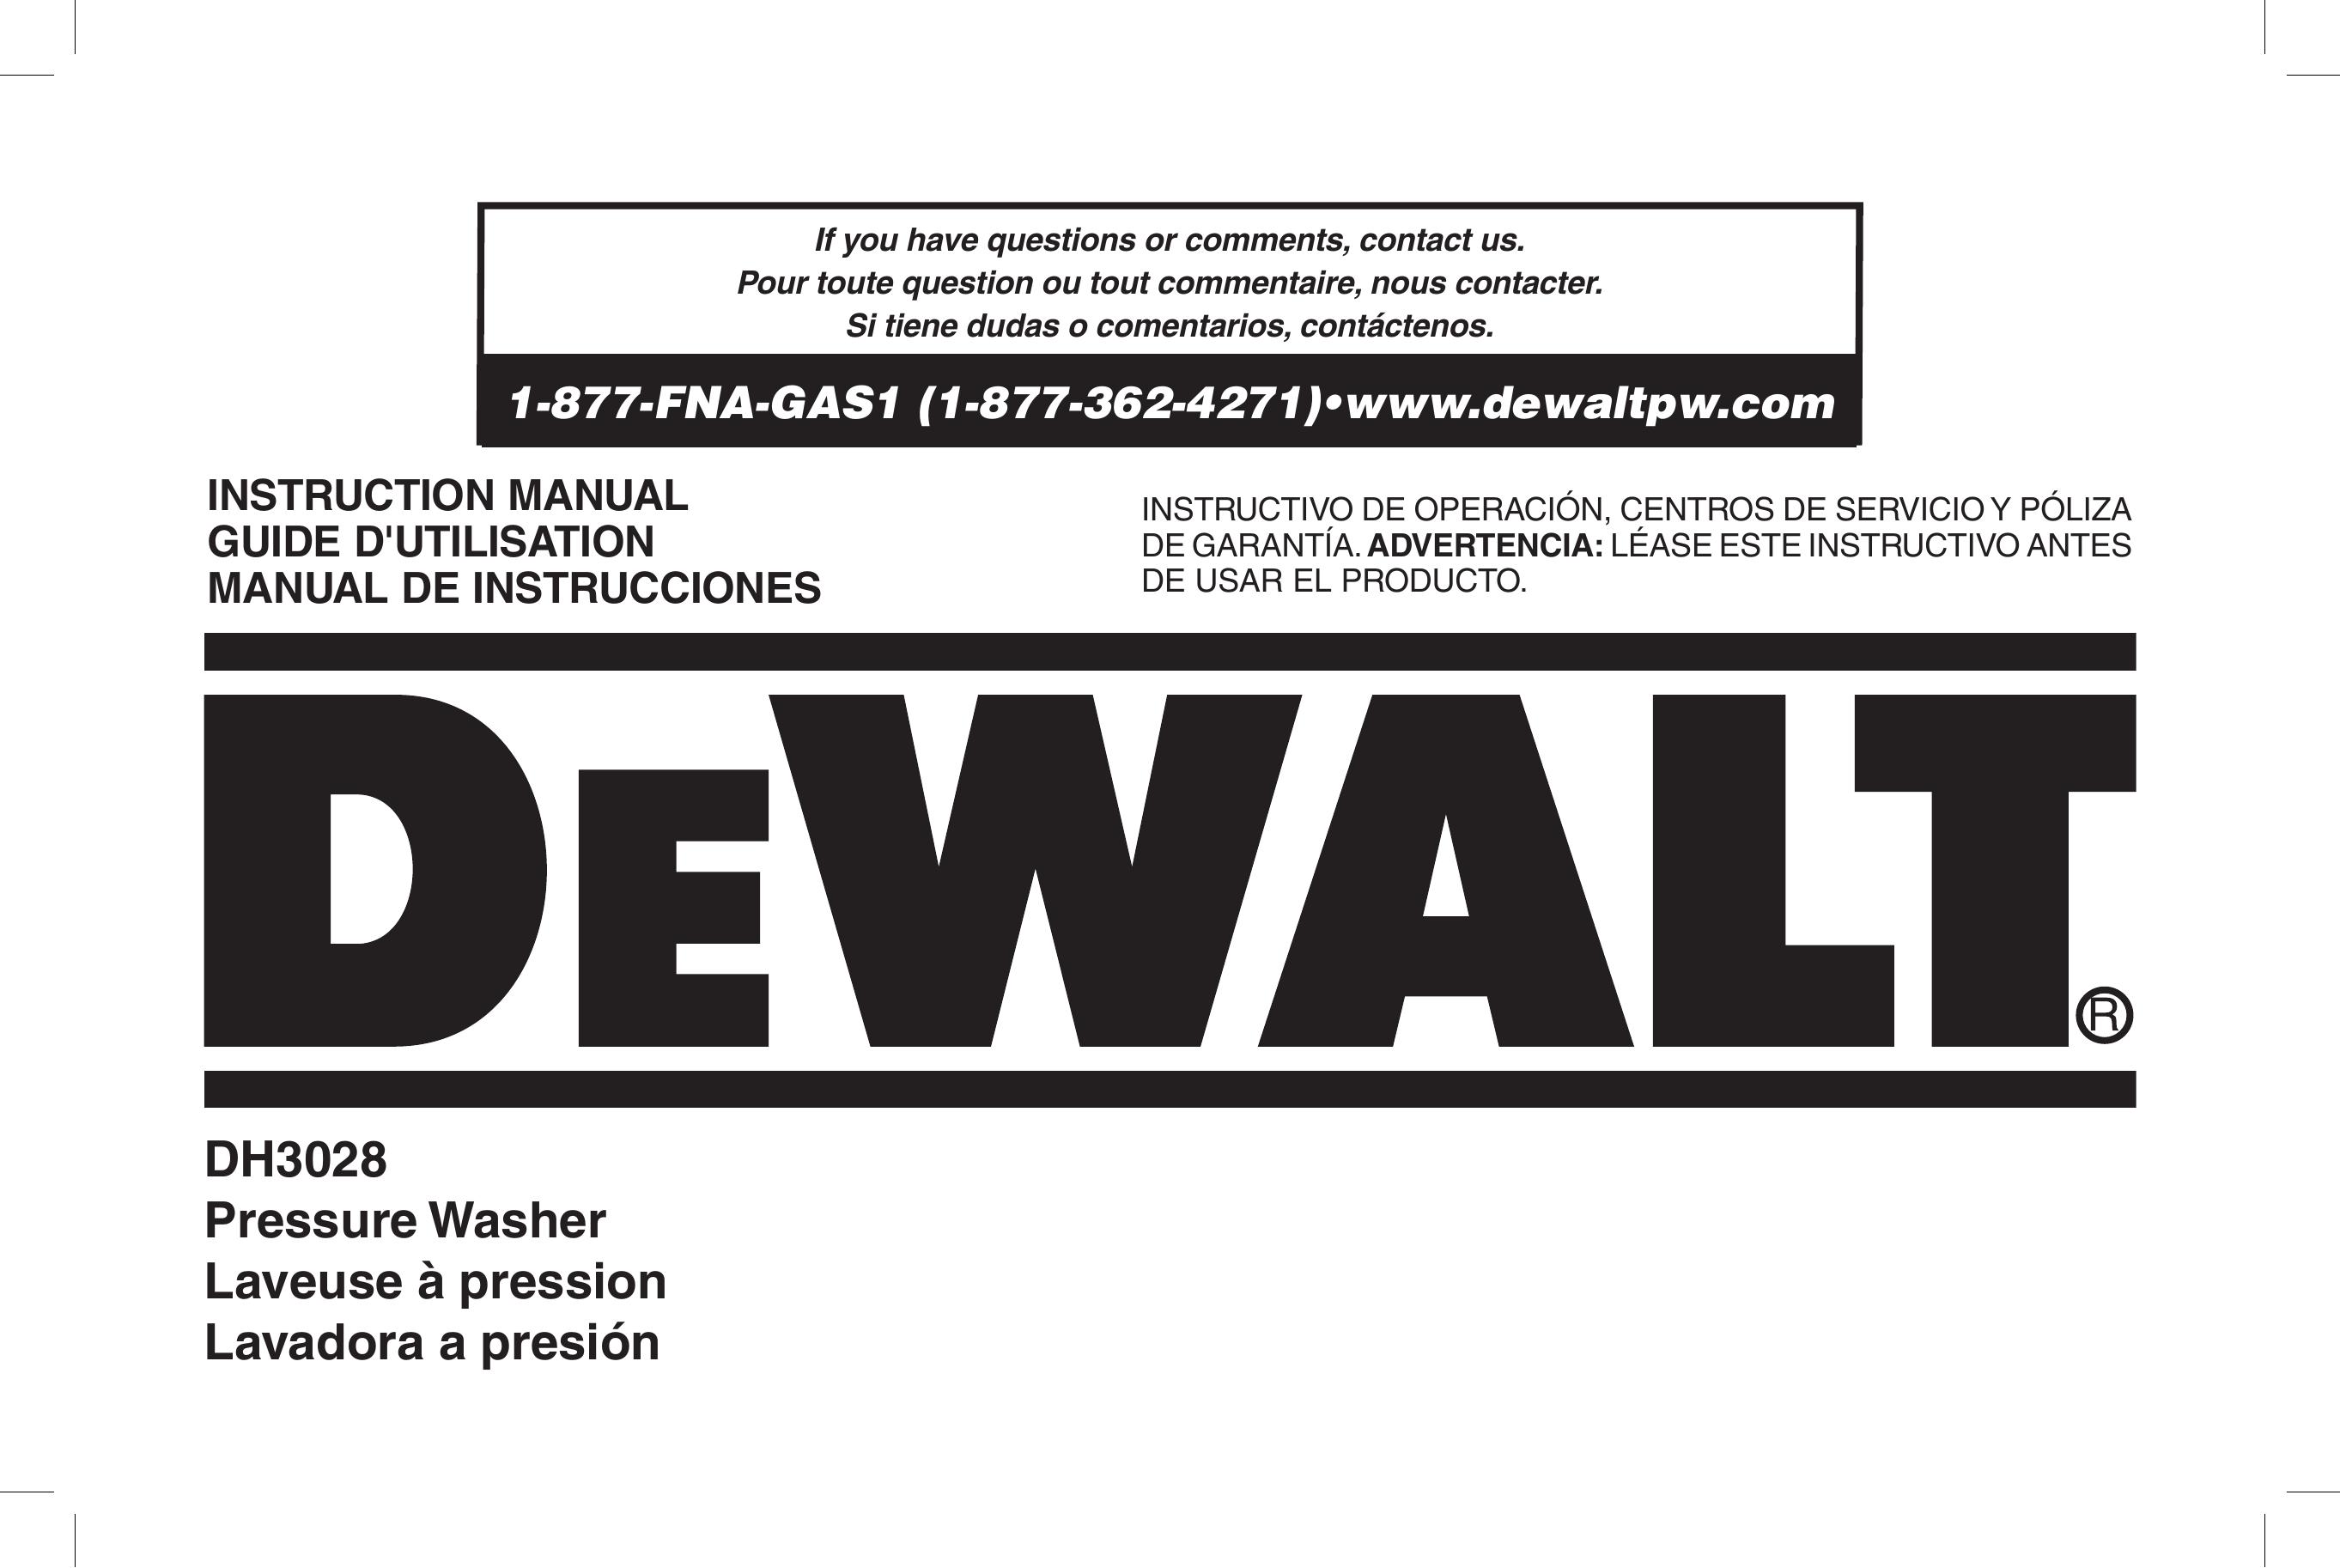 DeWalt DH3028 Pressure Washer User Manual